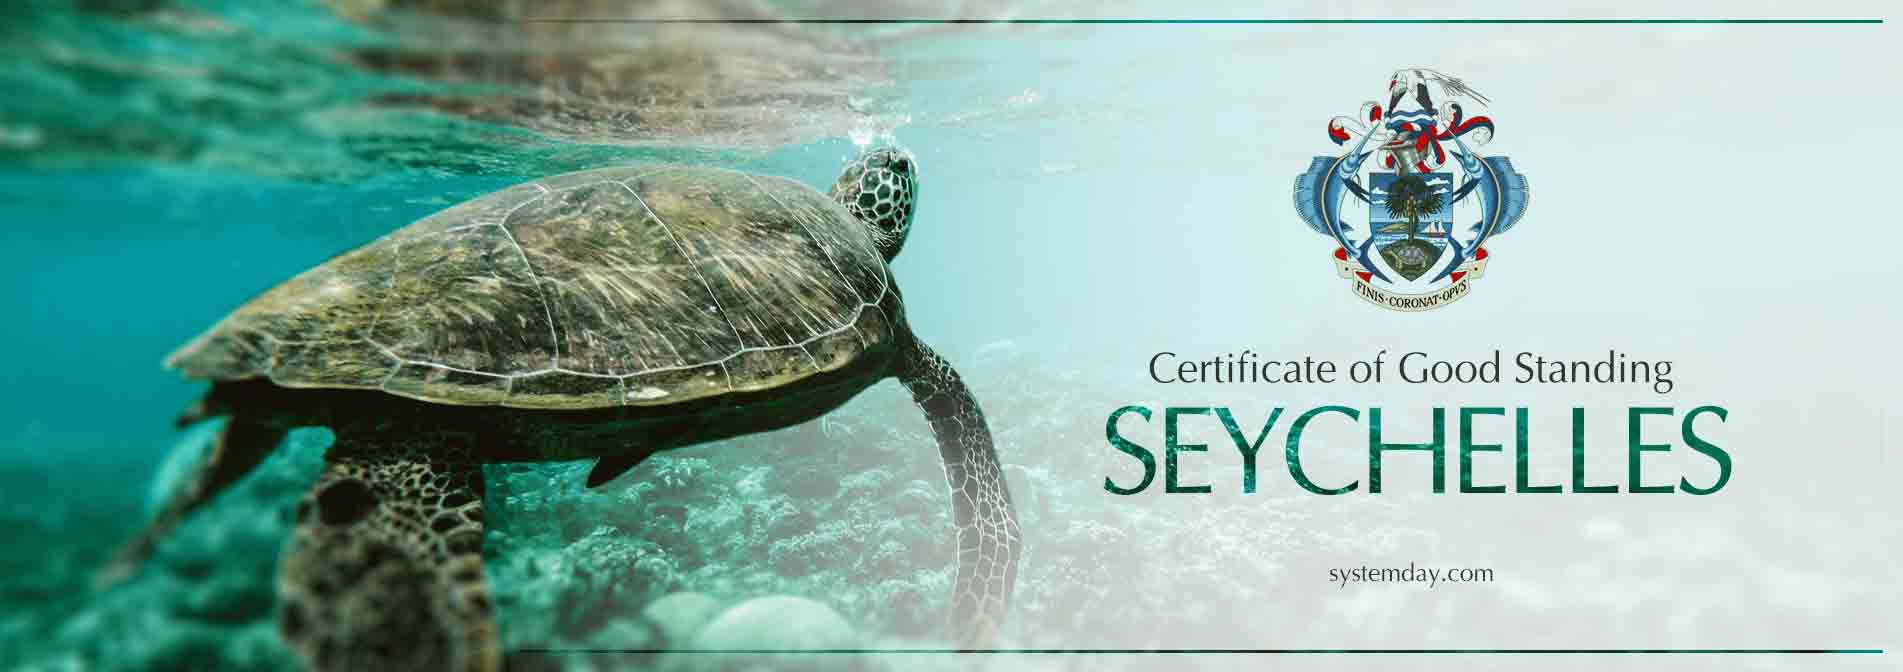 Seychelles Certificate of Good Standing